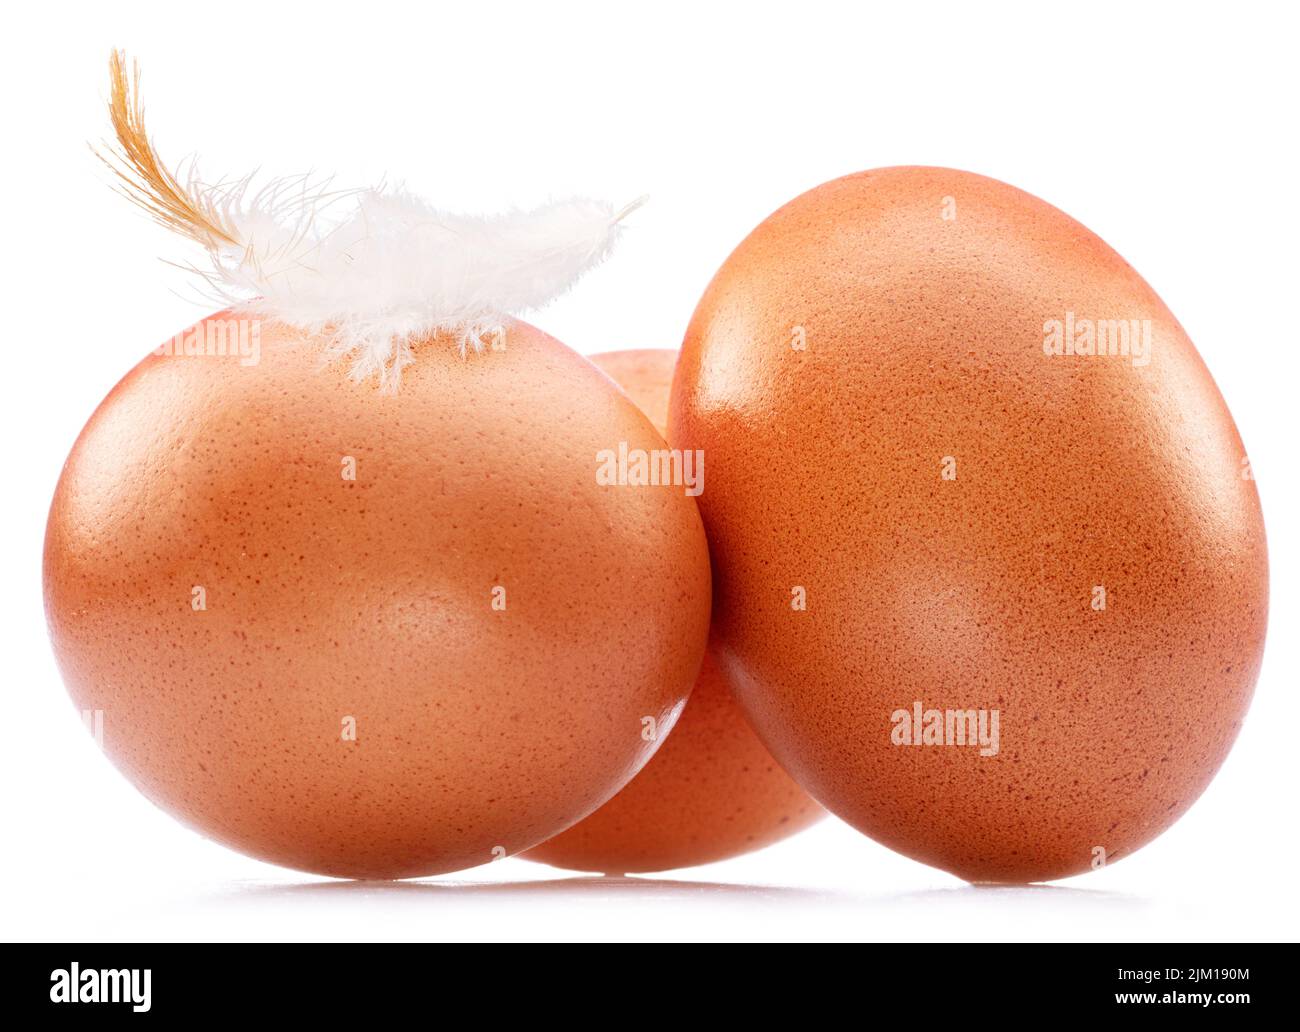 Dore los huevos de pollo con plumas de pollo aisladas sobre fondo blanco. Foto de stock